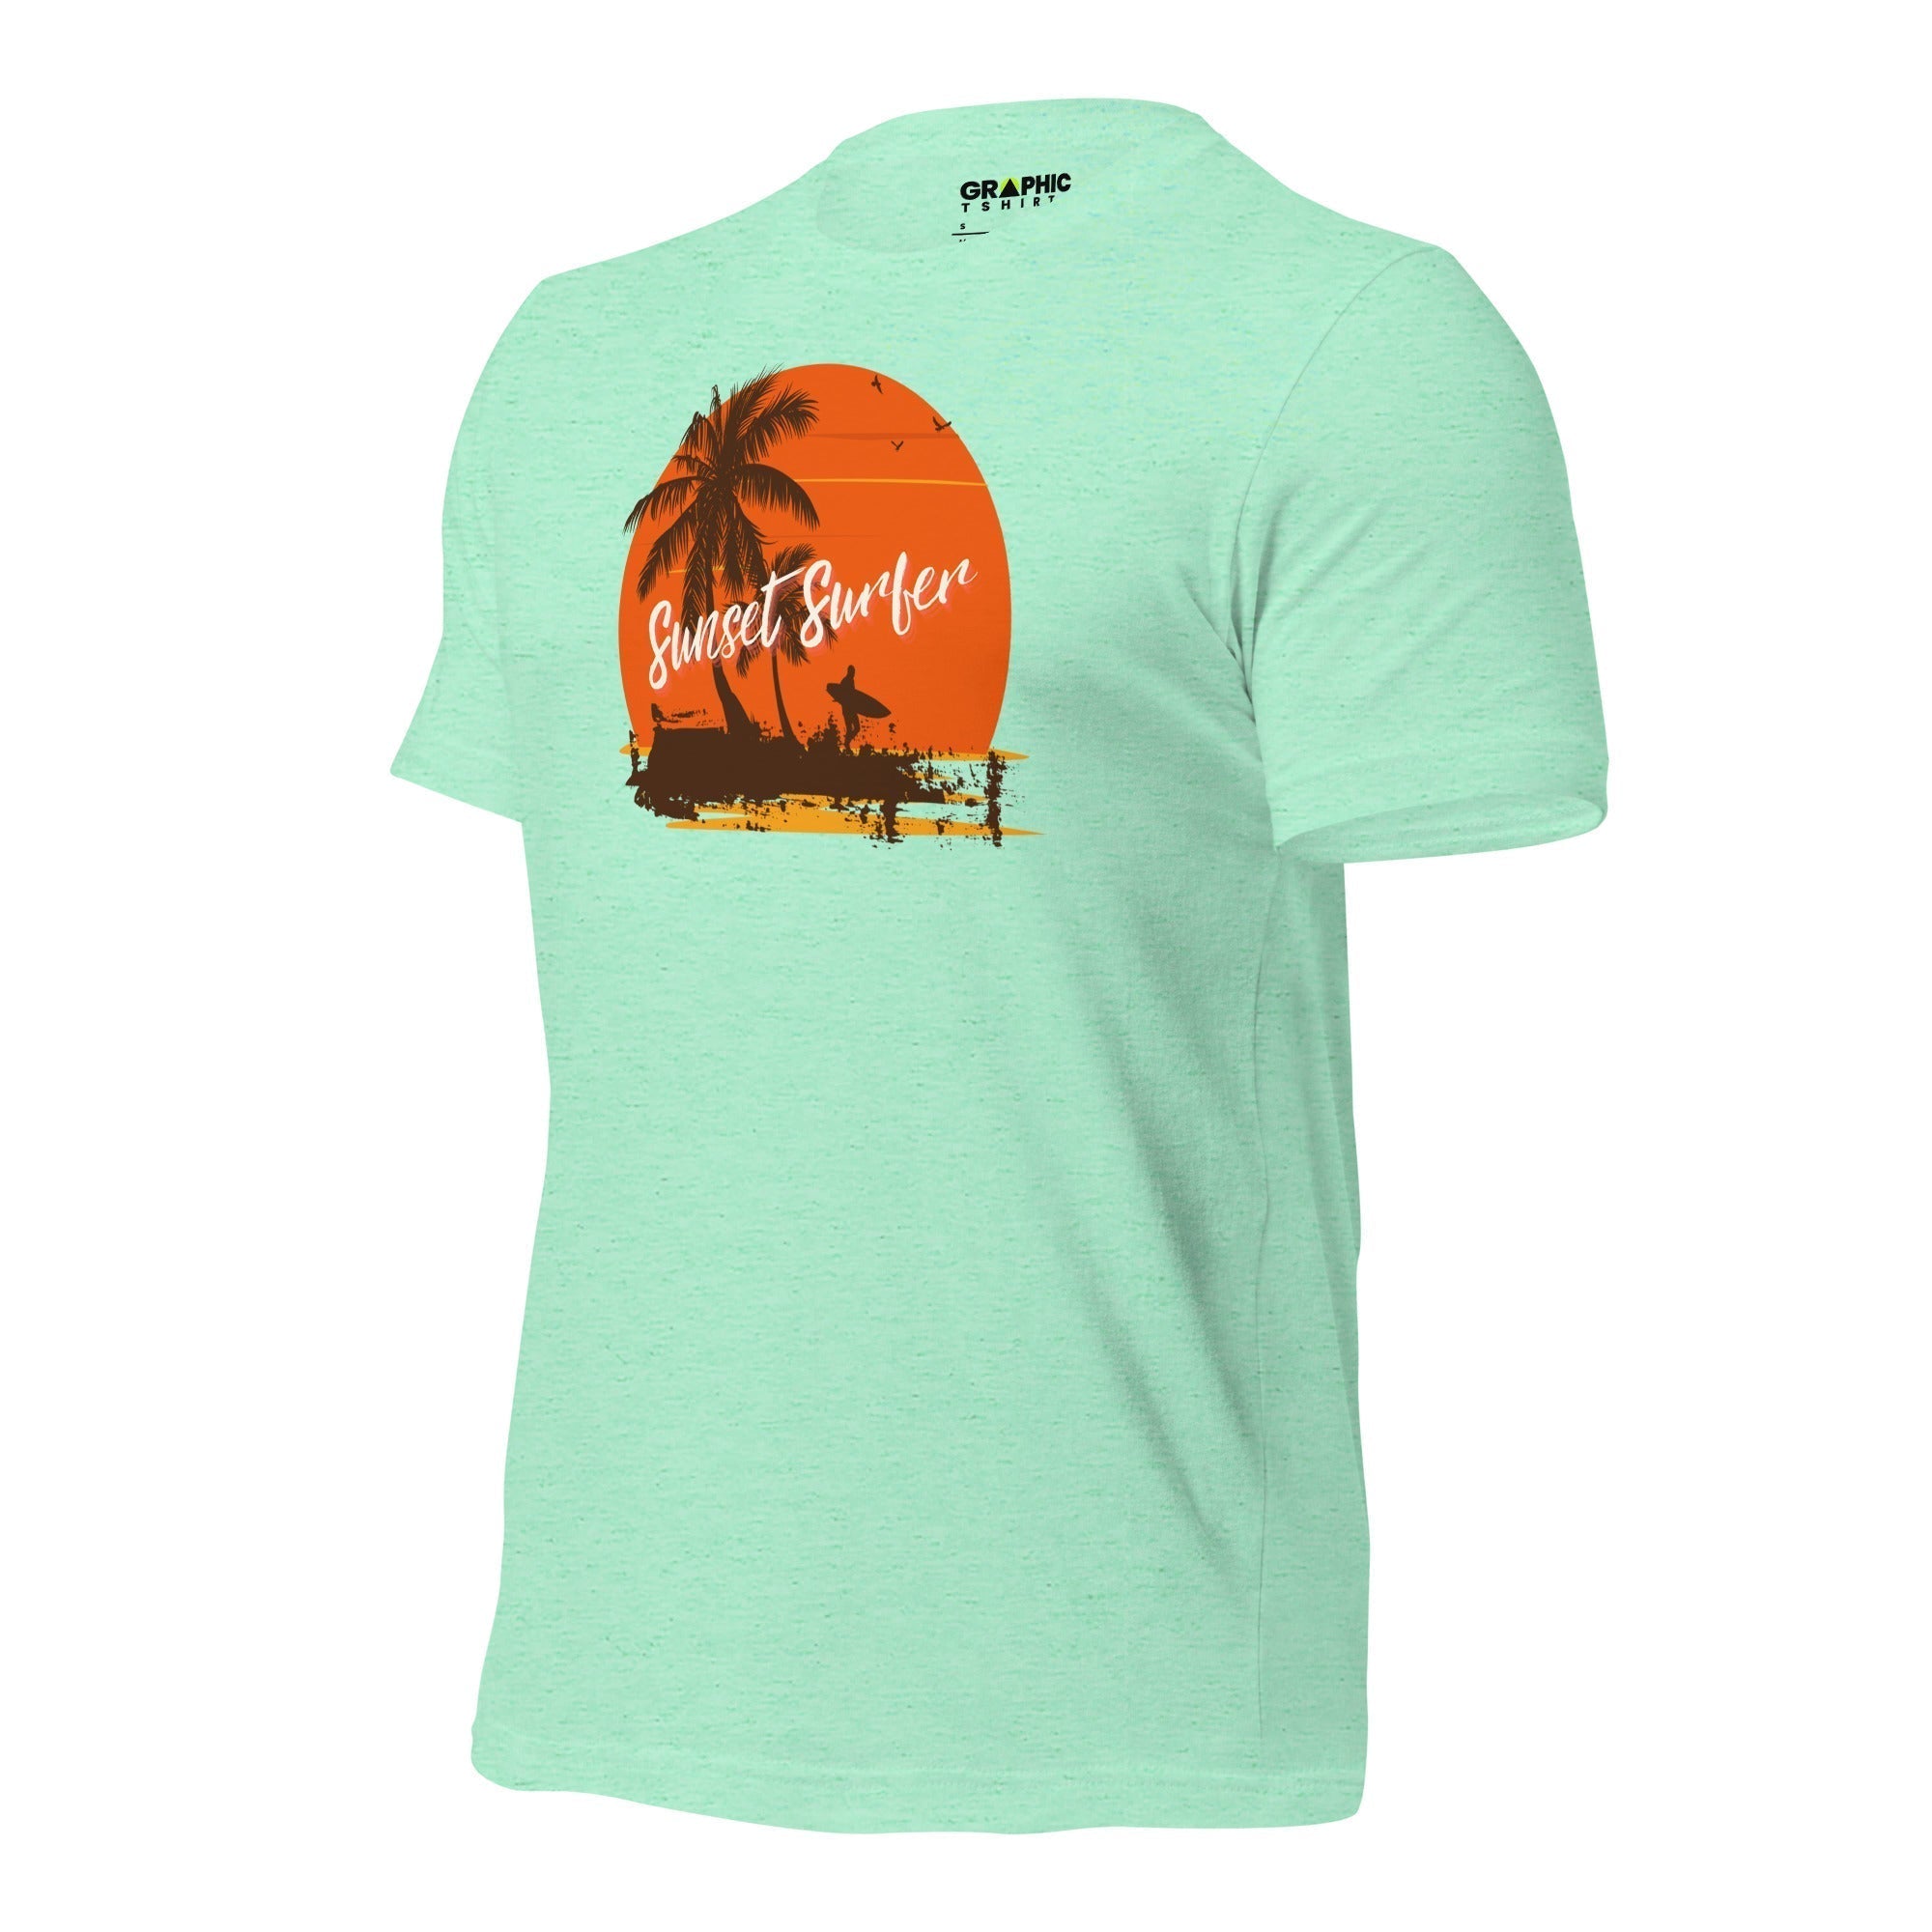 Unisex Staple T-Shirt - Sunset Surfer - GRAPHIC T-SHIRTS